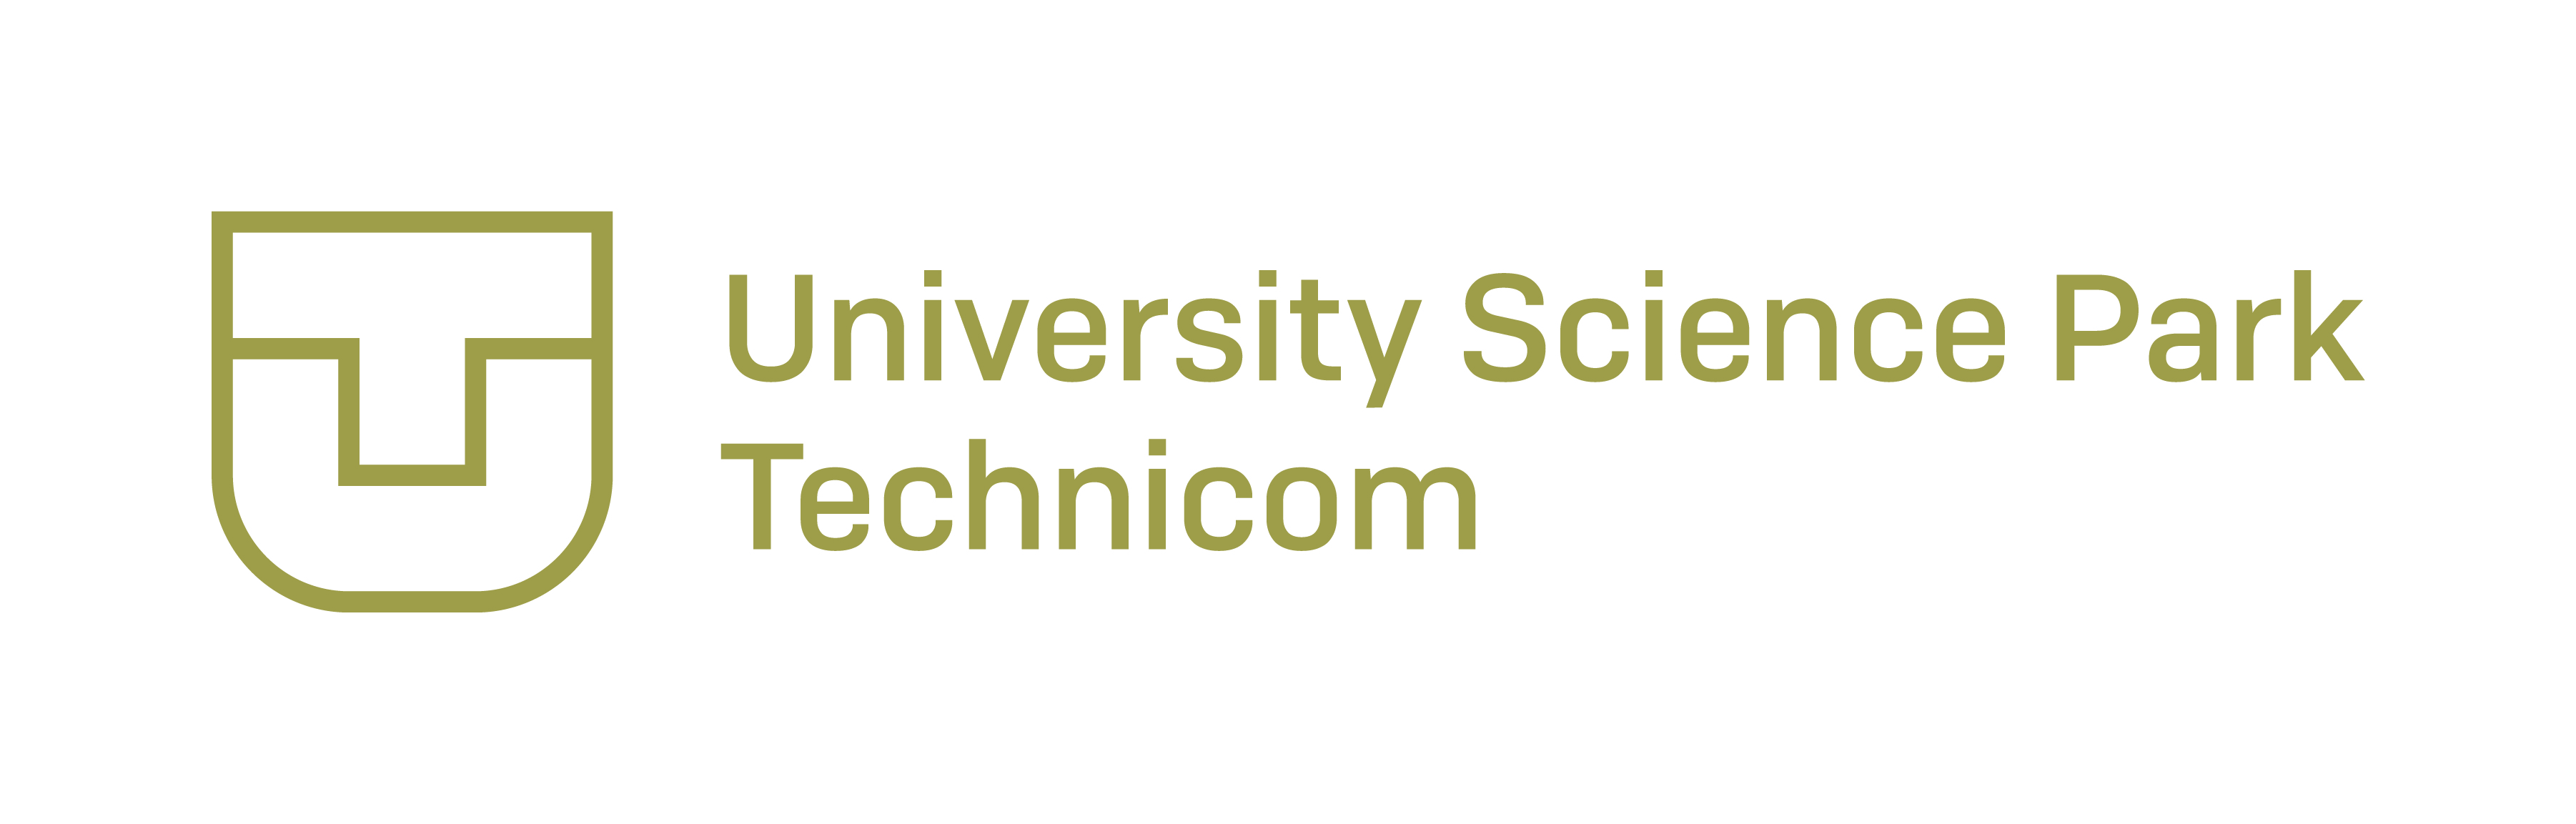 University Science Park Technicom